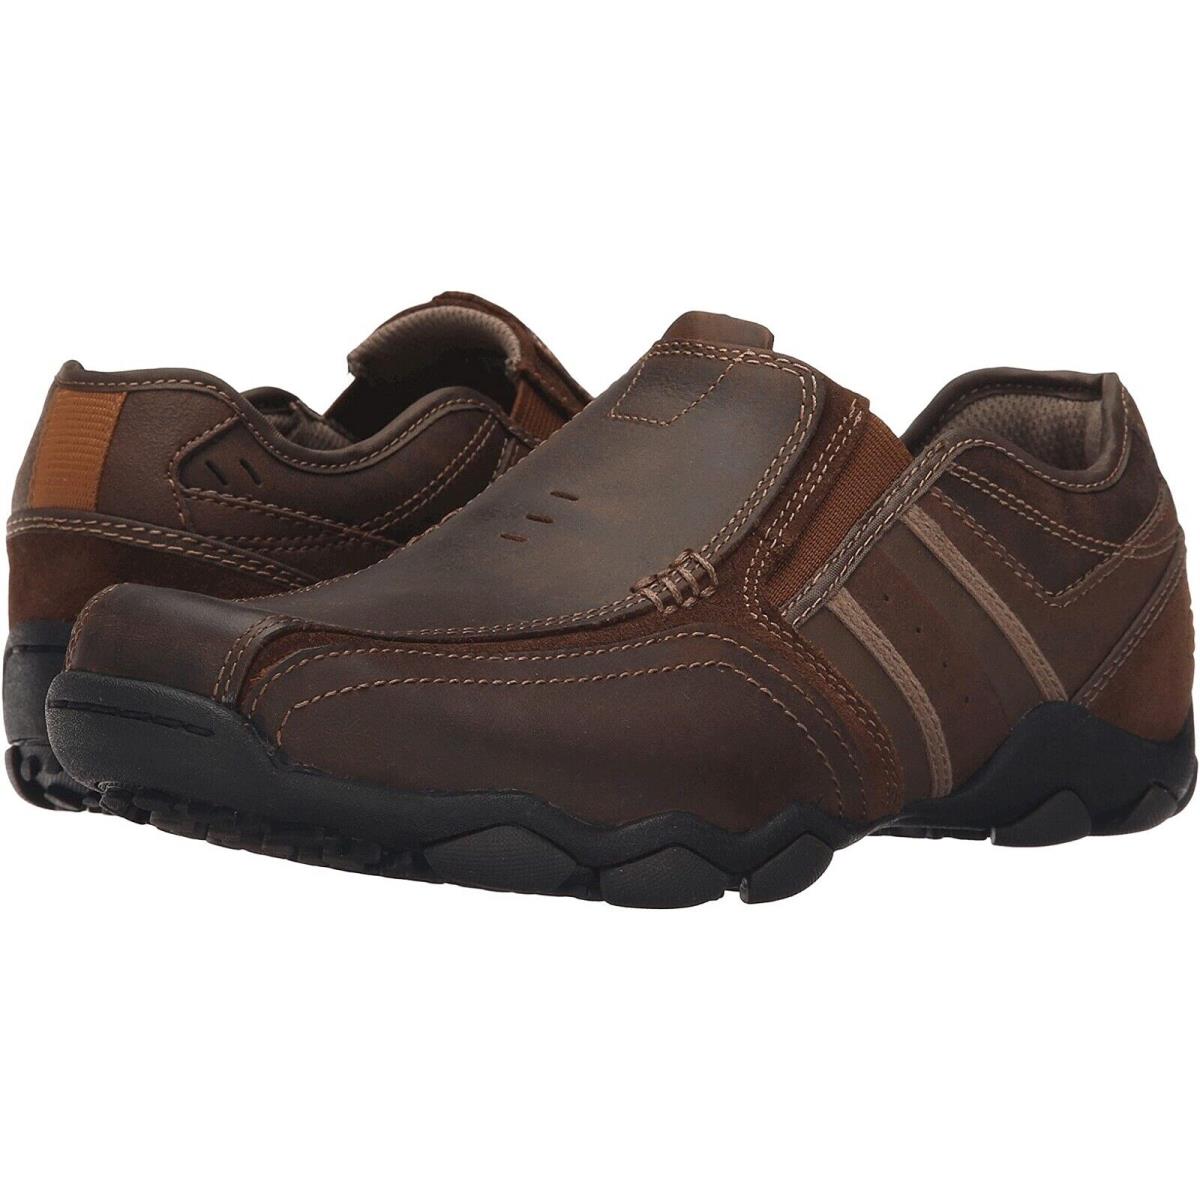 Skechers Men Diameter Zinroy Memory Foam Leather Shoes 64275 Dark Brown Size 11 - Brown